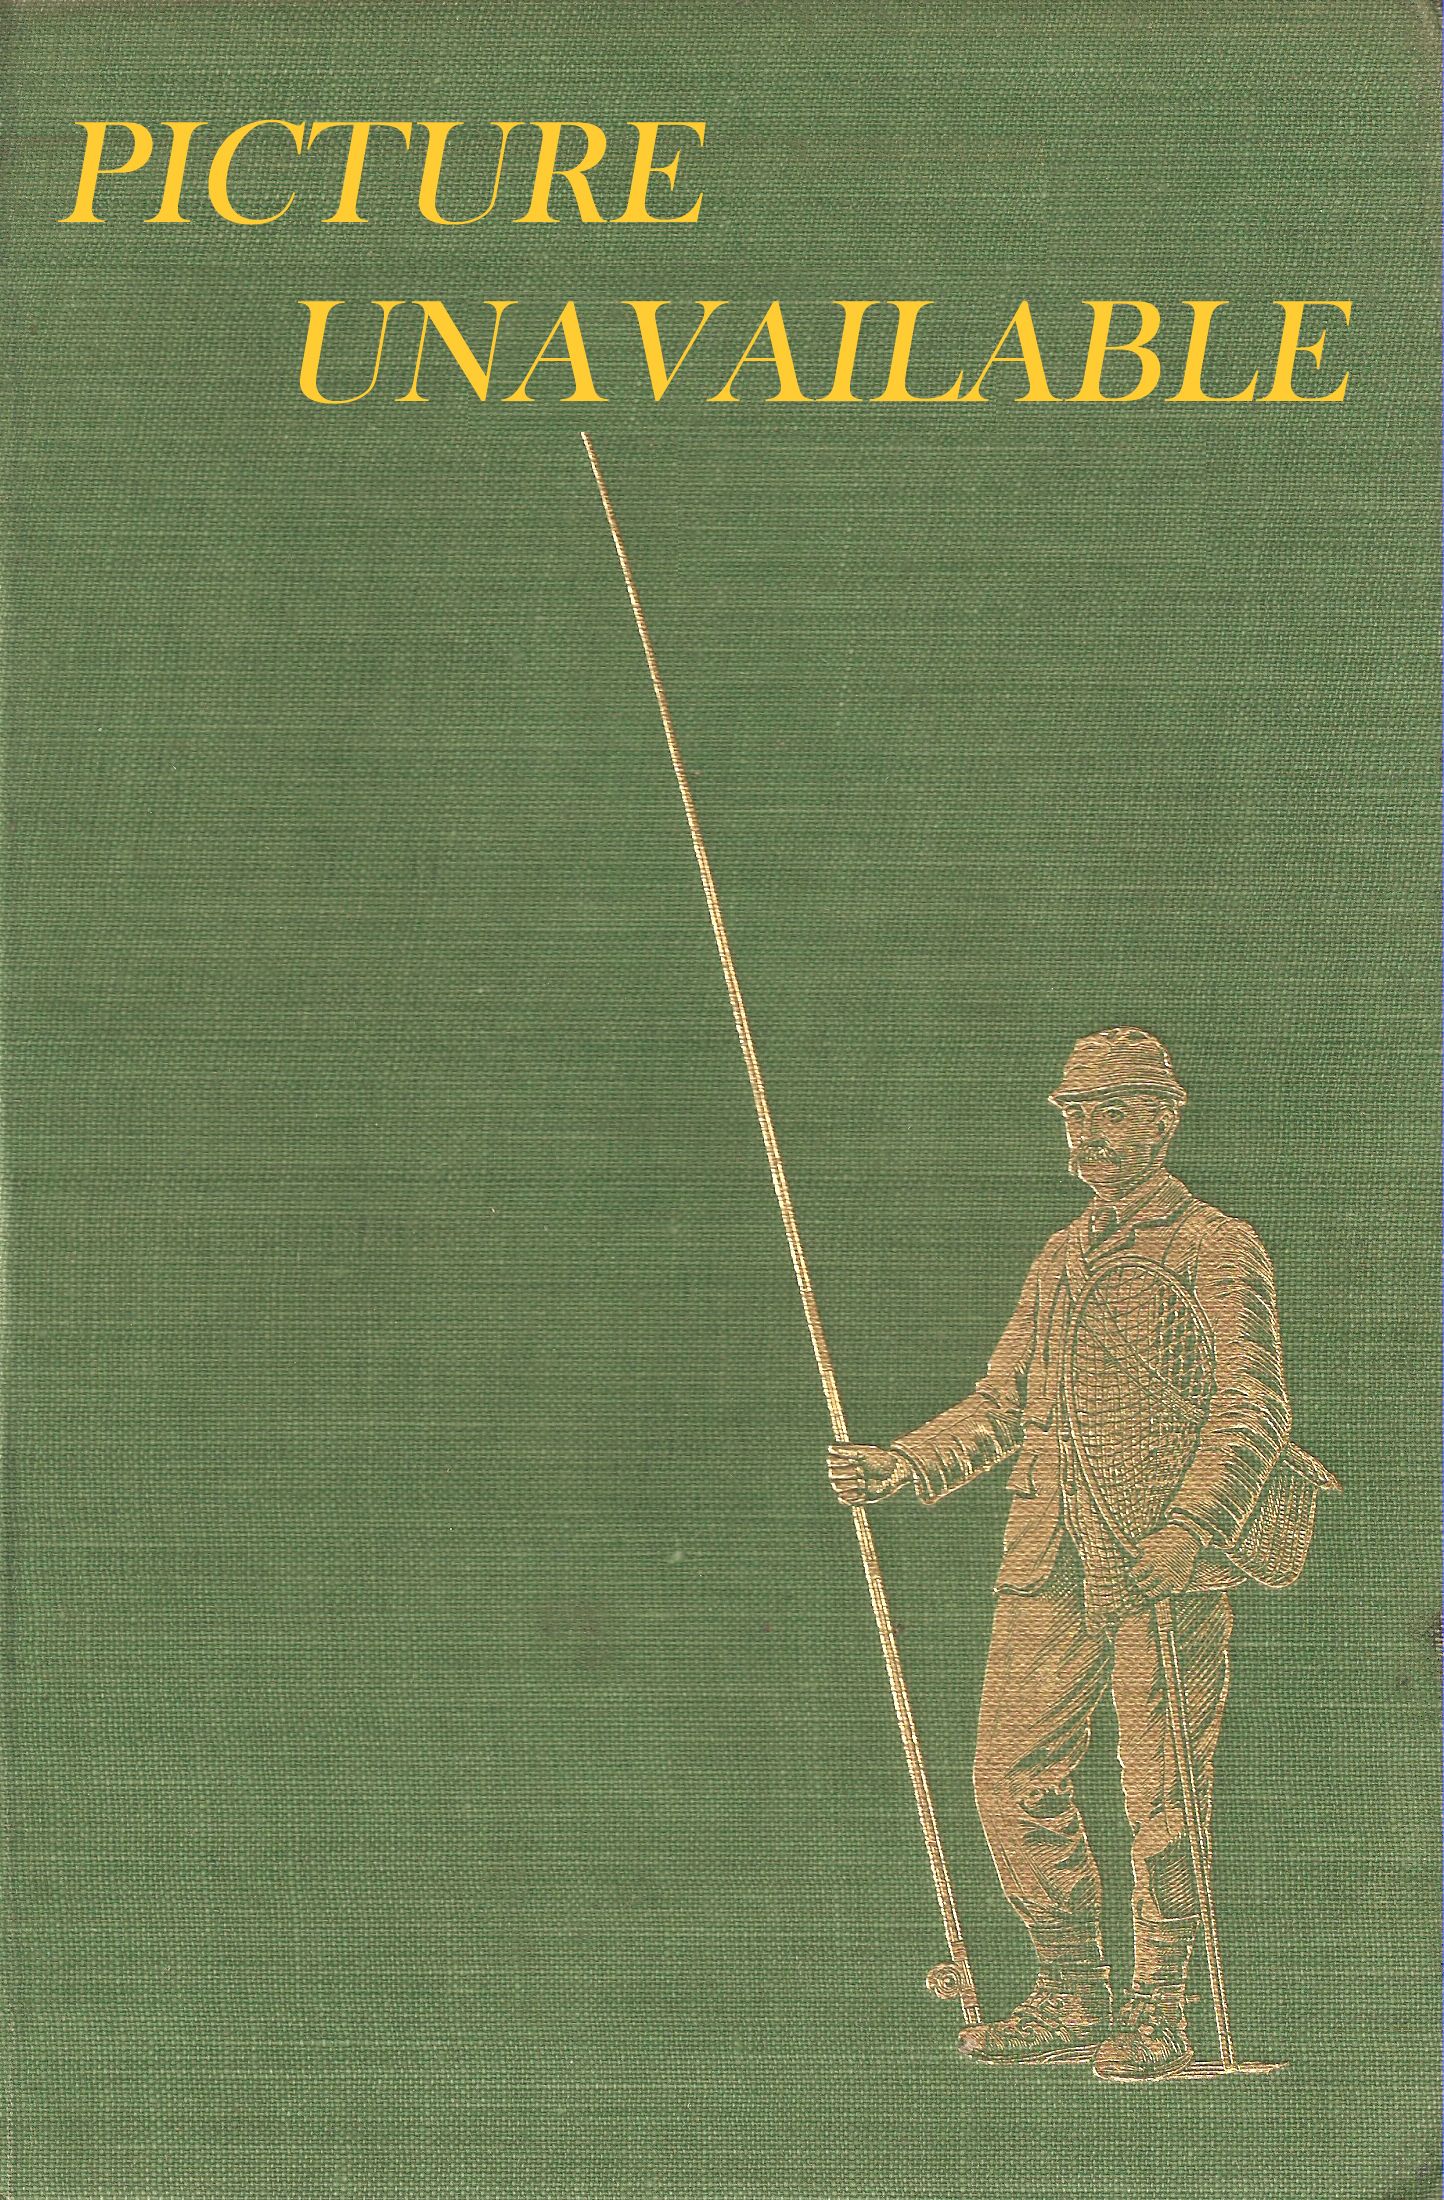 CREEL: A FISHING MAGAZINE. Volume 2, number 10. April 1965.